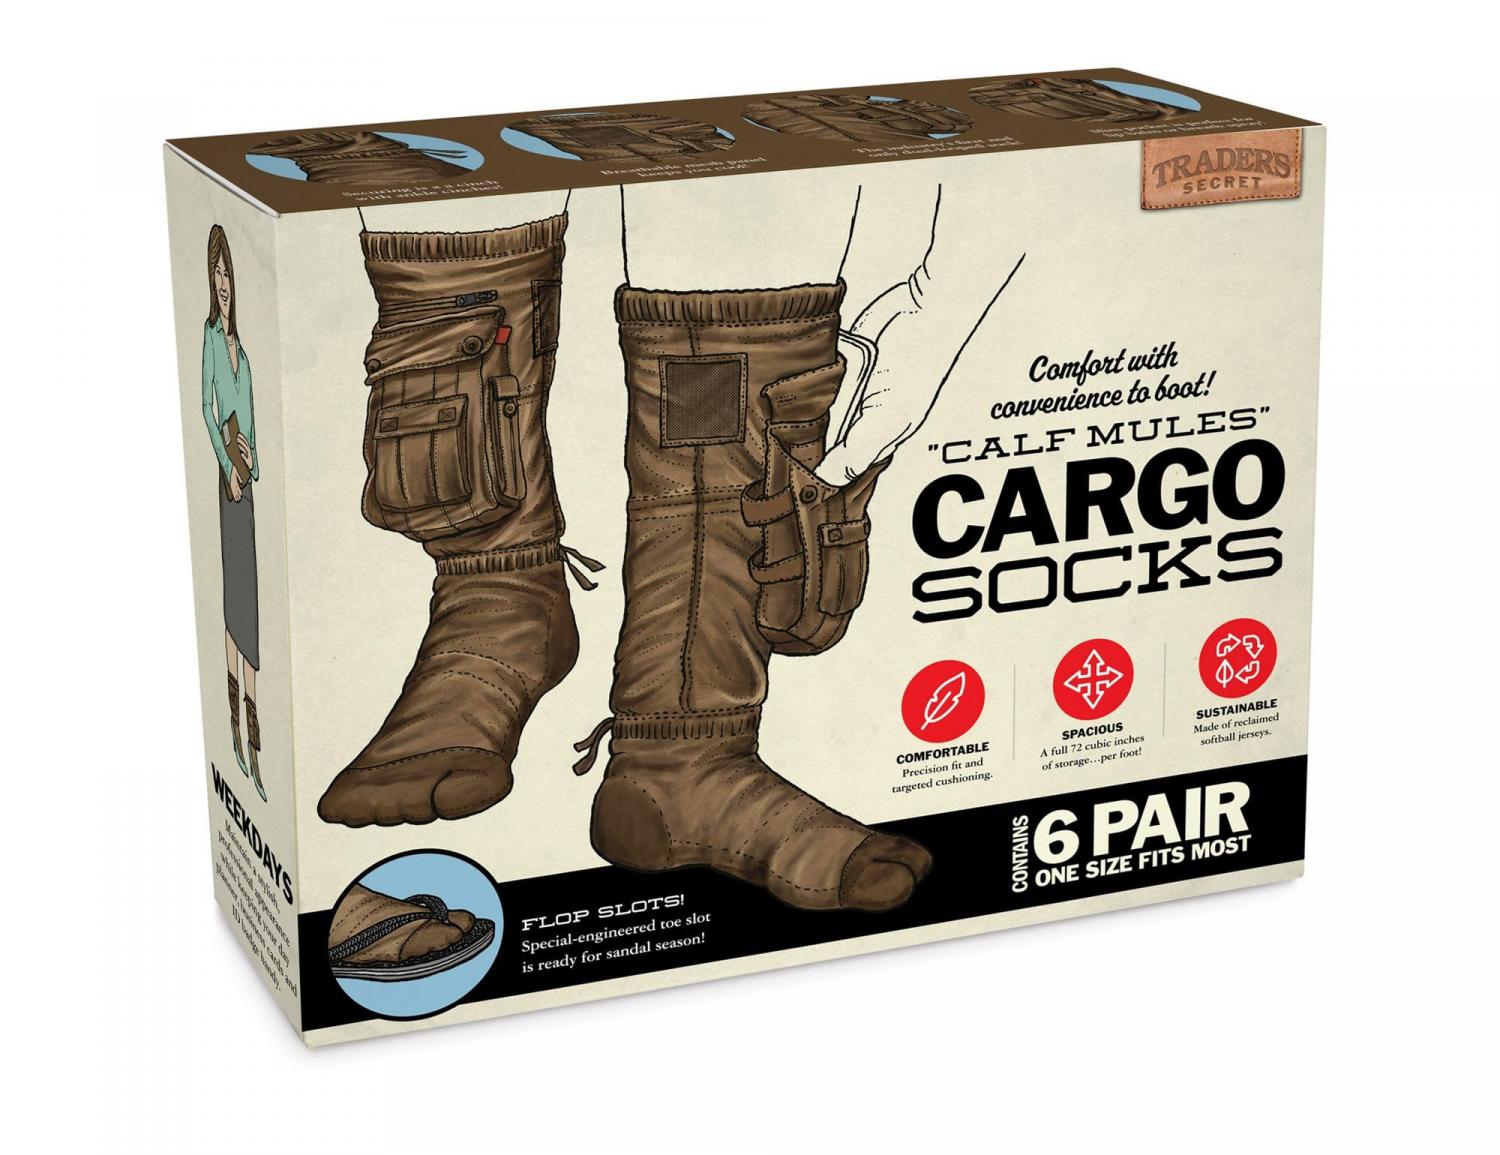 Cargo socks prank box